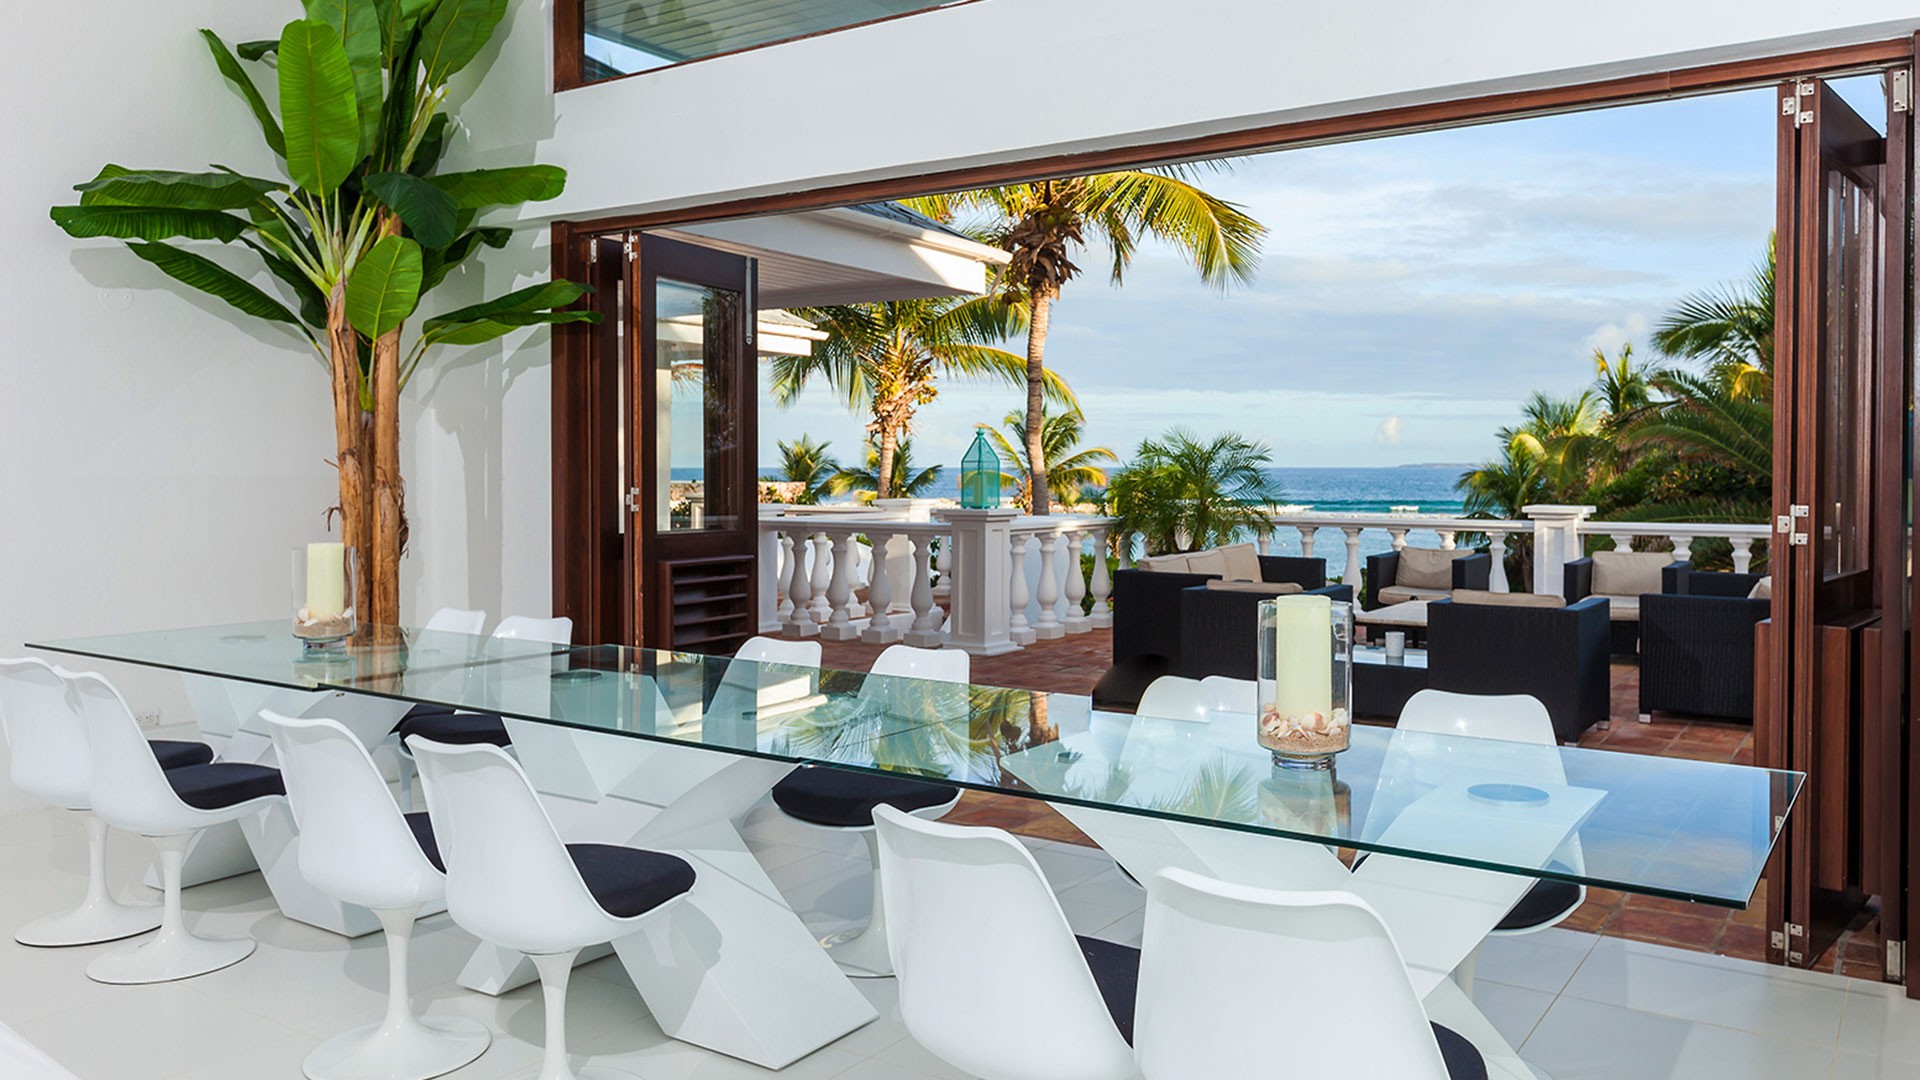 Indigo-Villa-Anguilla-Rental-Properties-in-Paradise-dining